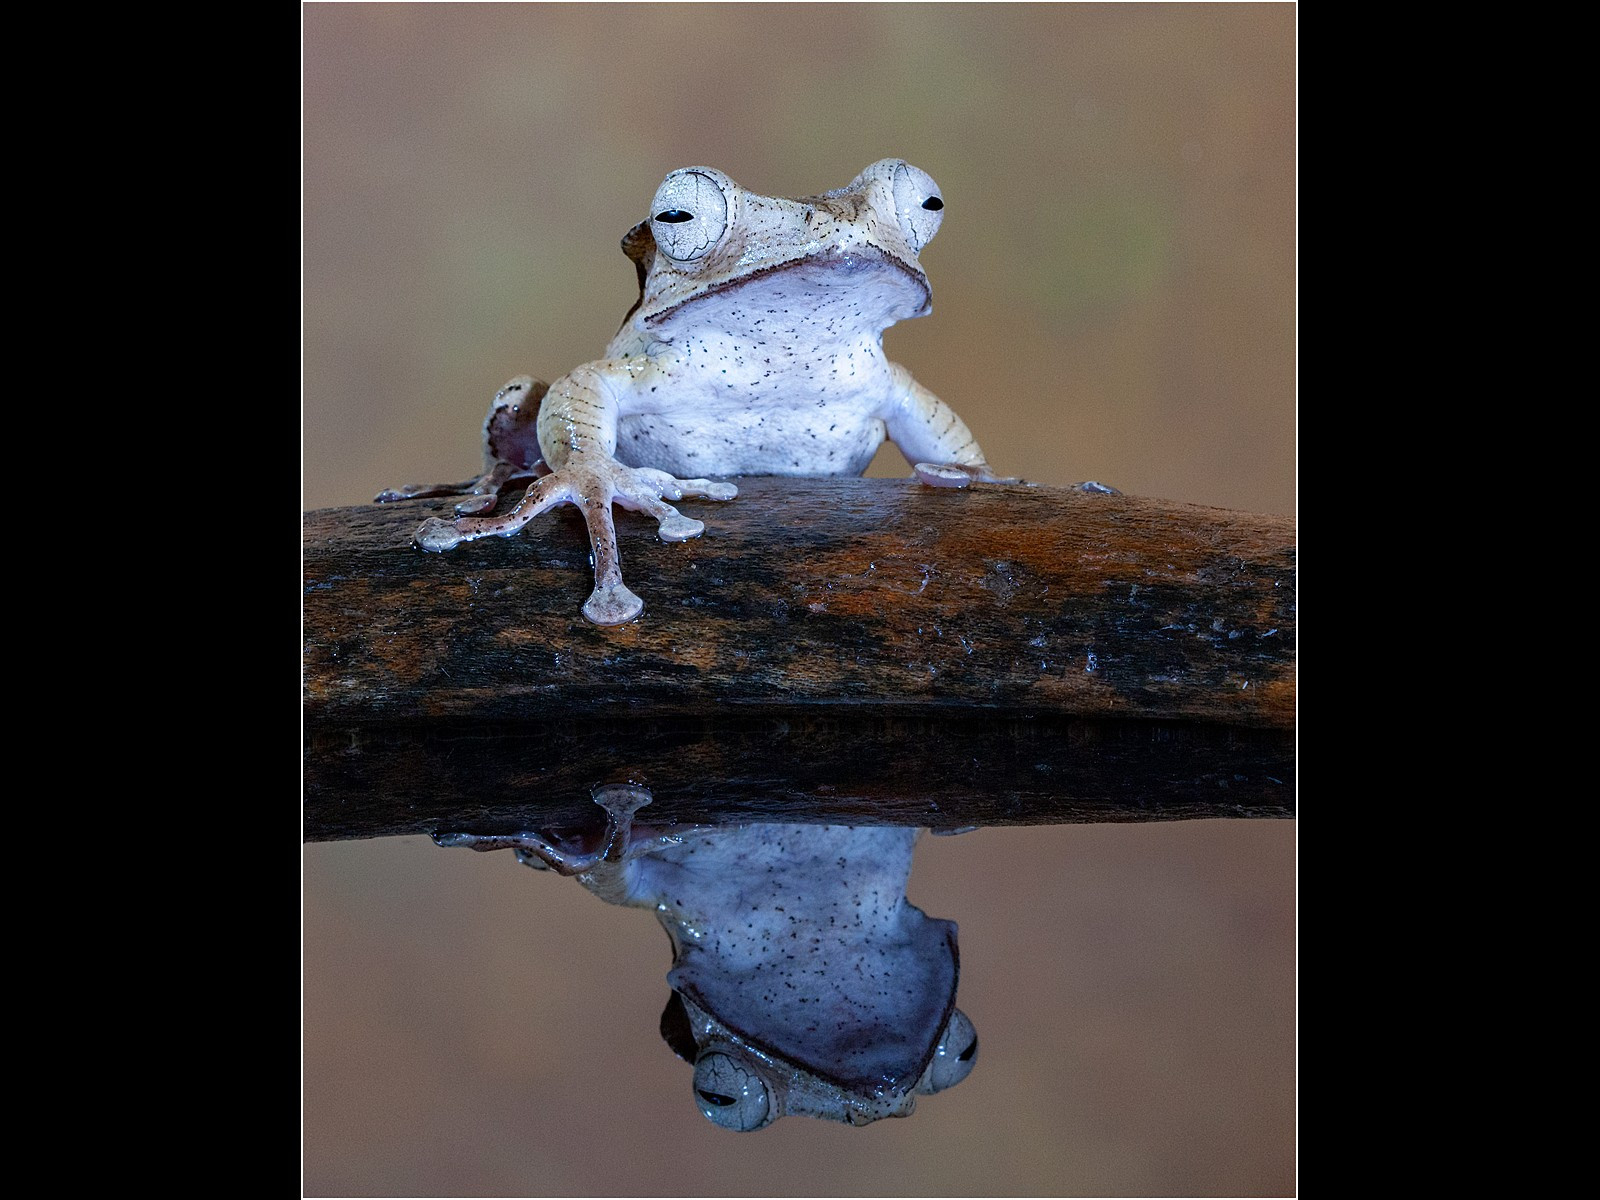 Golden Tree Frog & Reflection